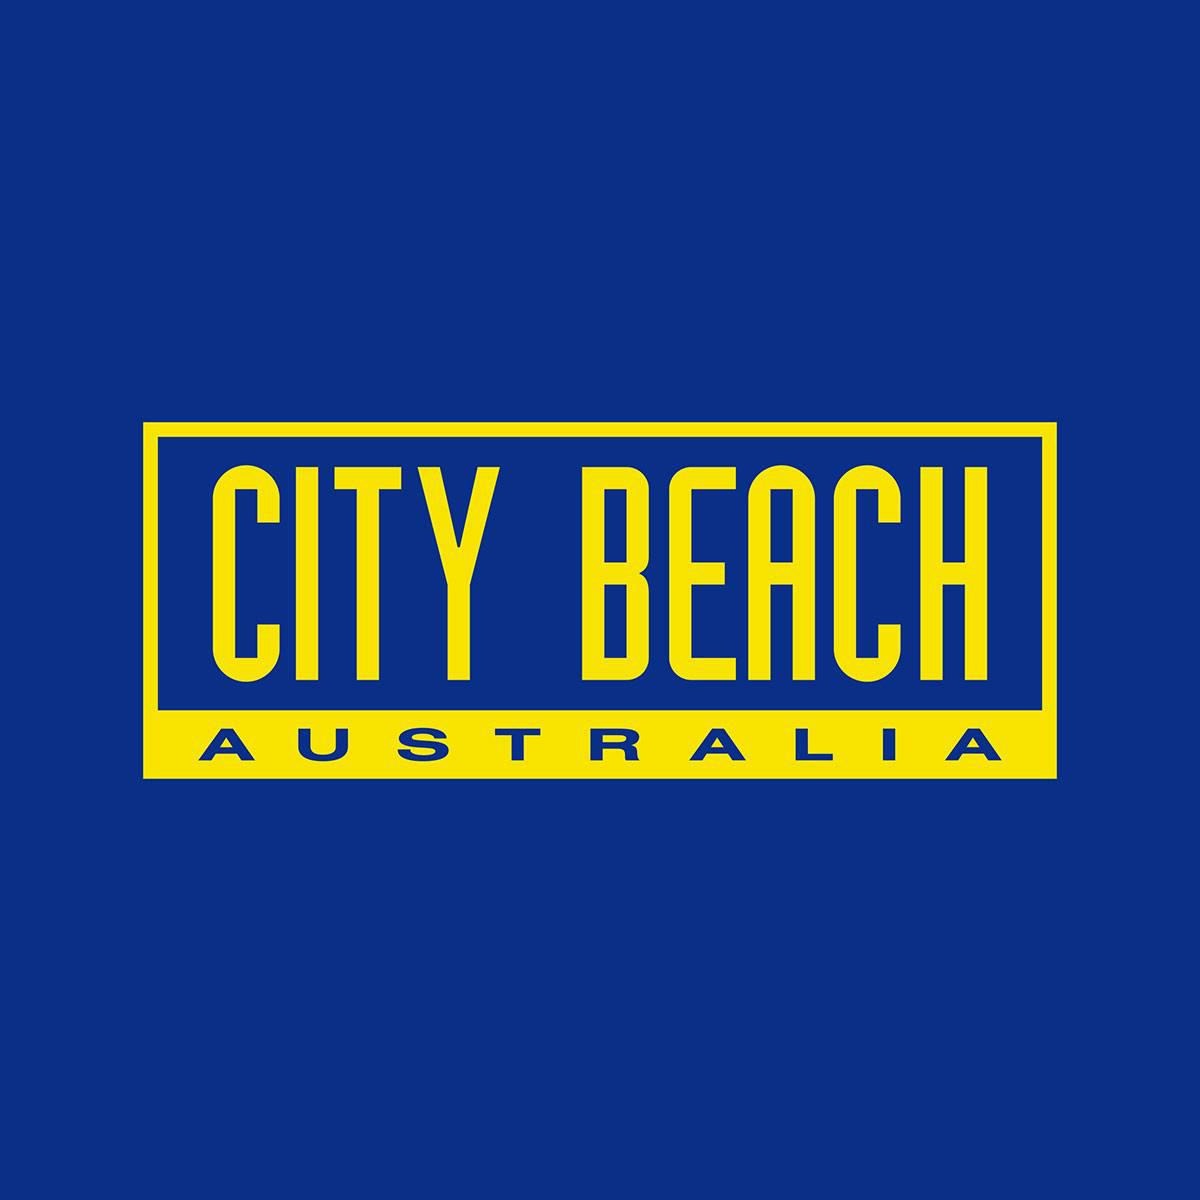 City Beach - Queen Street Brisbane